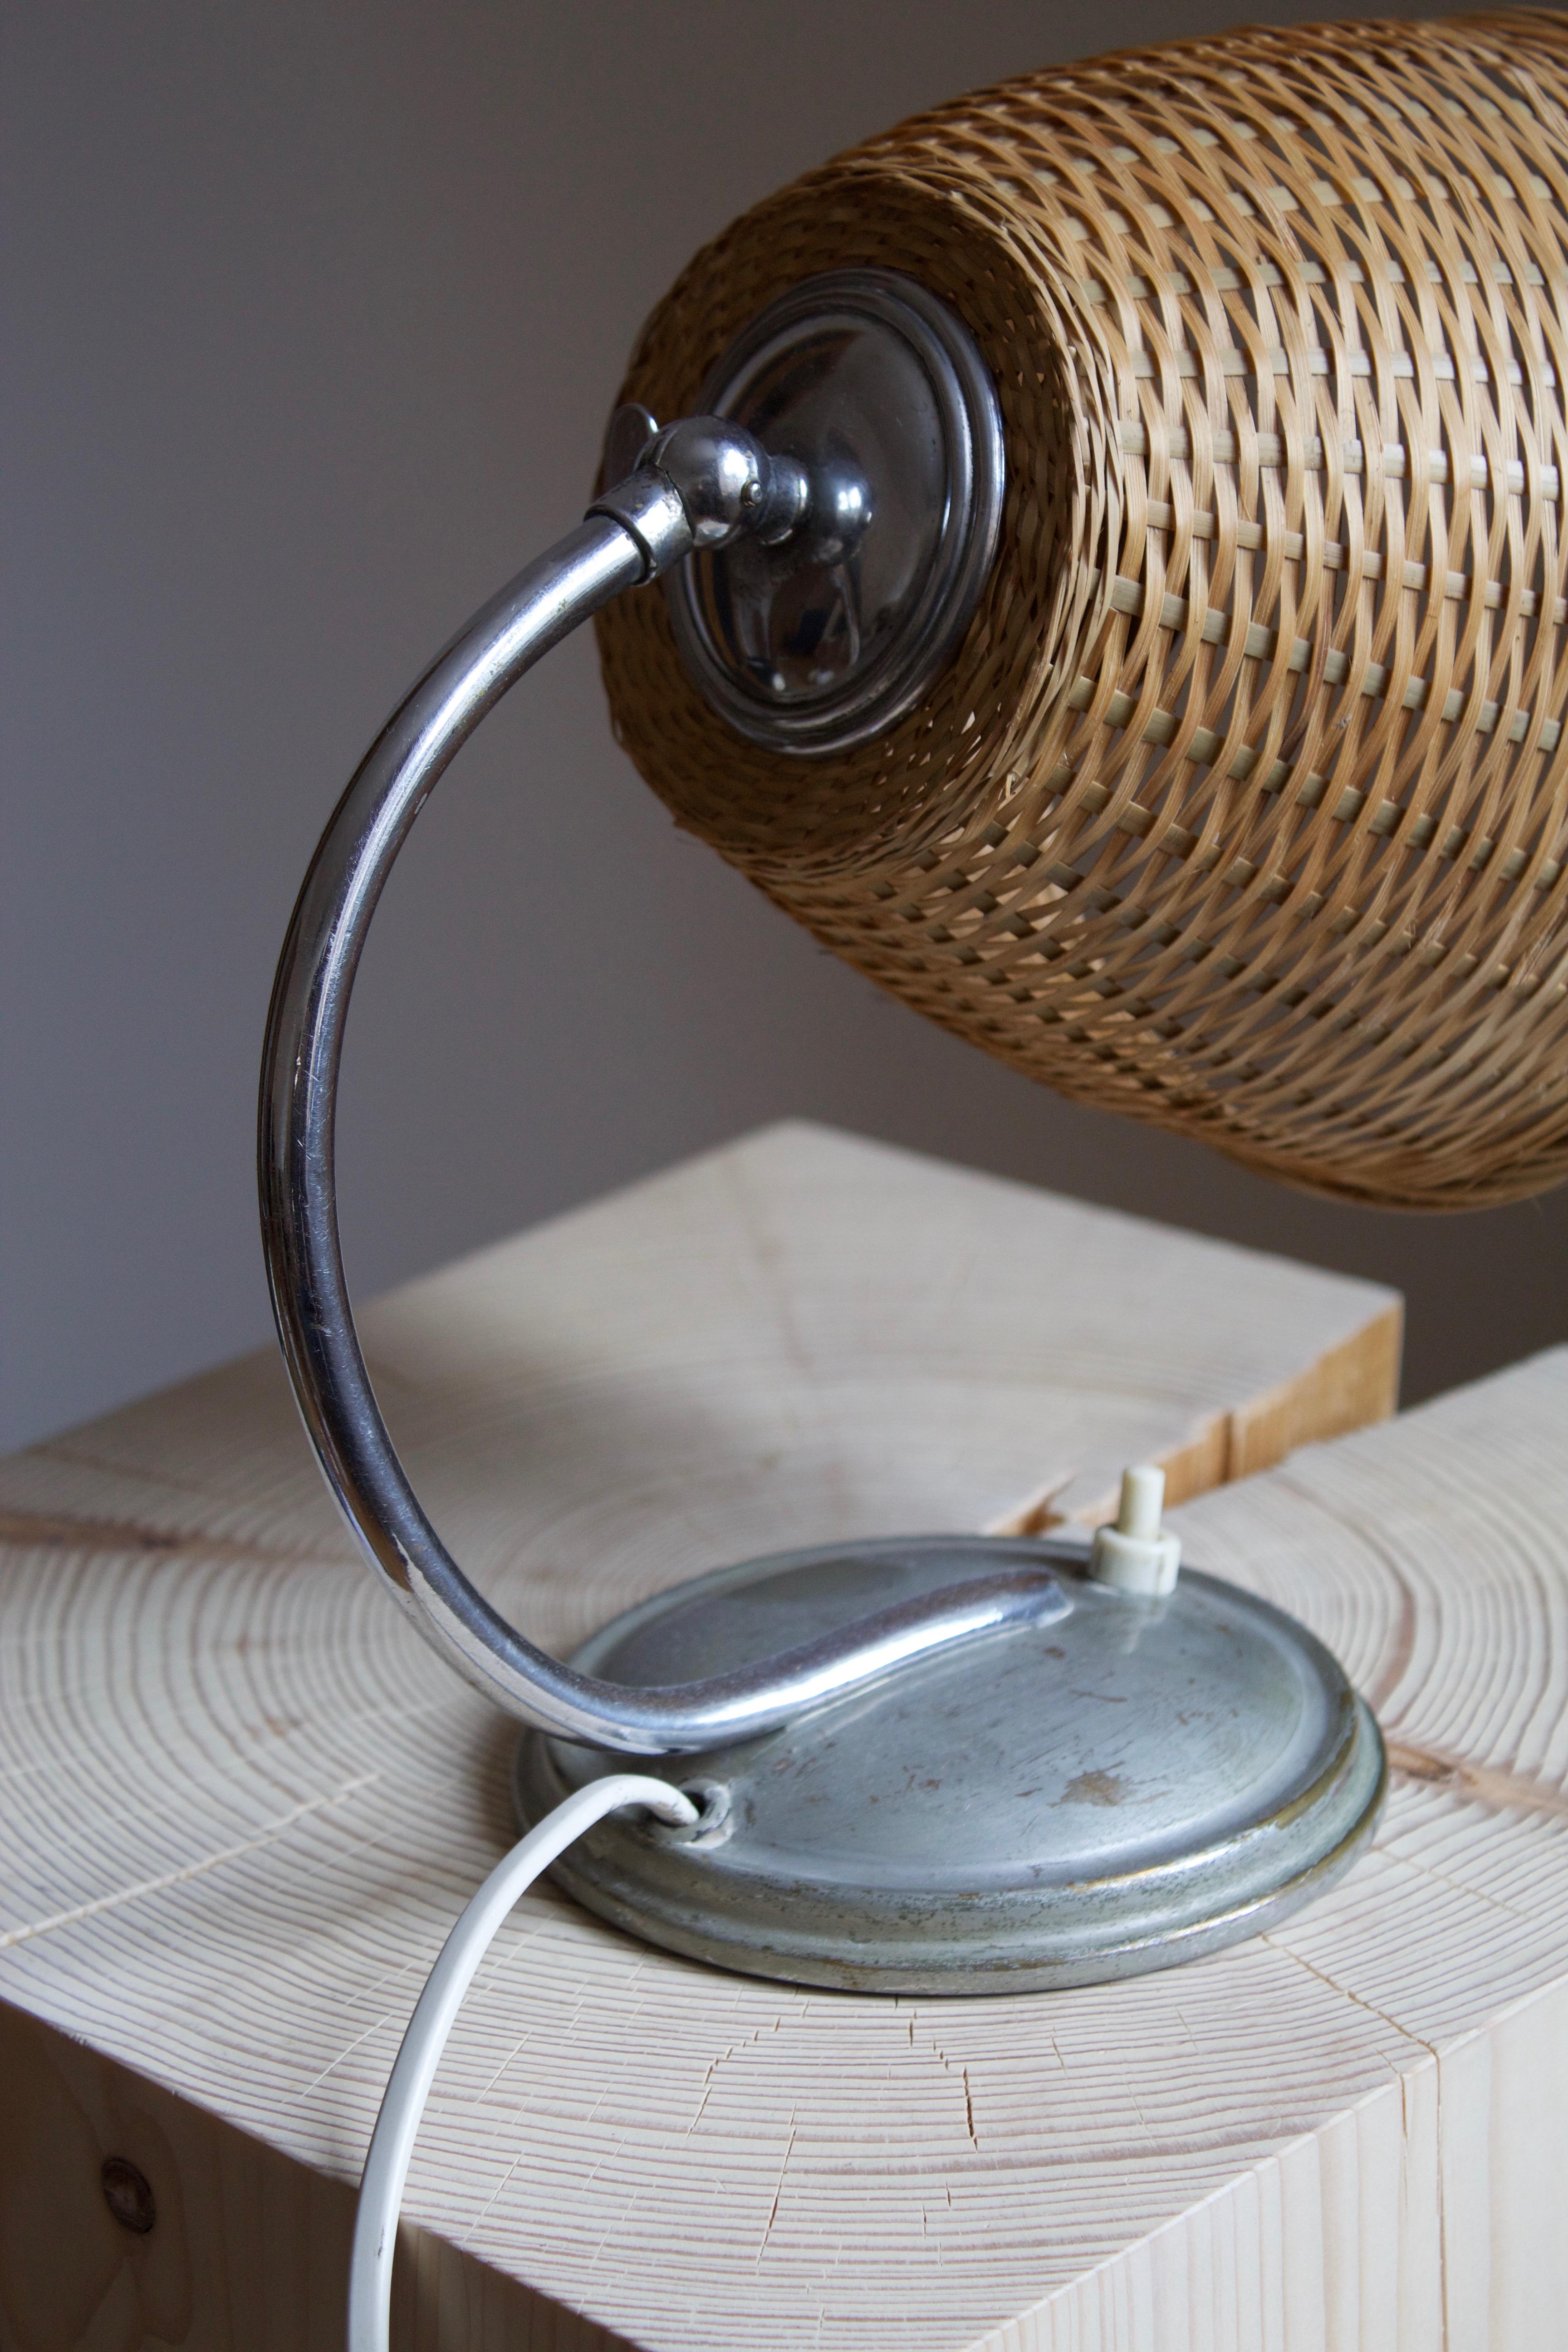 Mid-20th Century Swedish, Small Functionalist Table Lamp, Metal, Rattan, c. 1940s